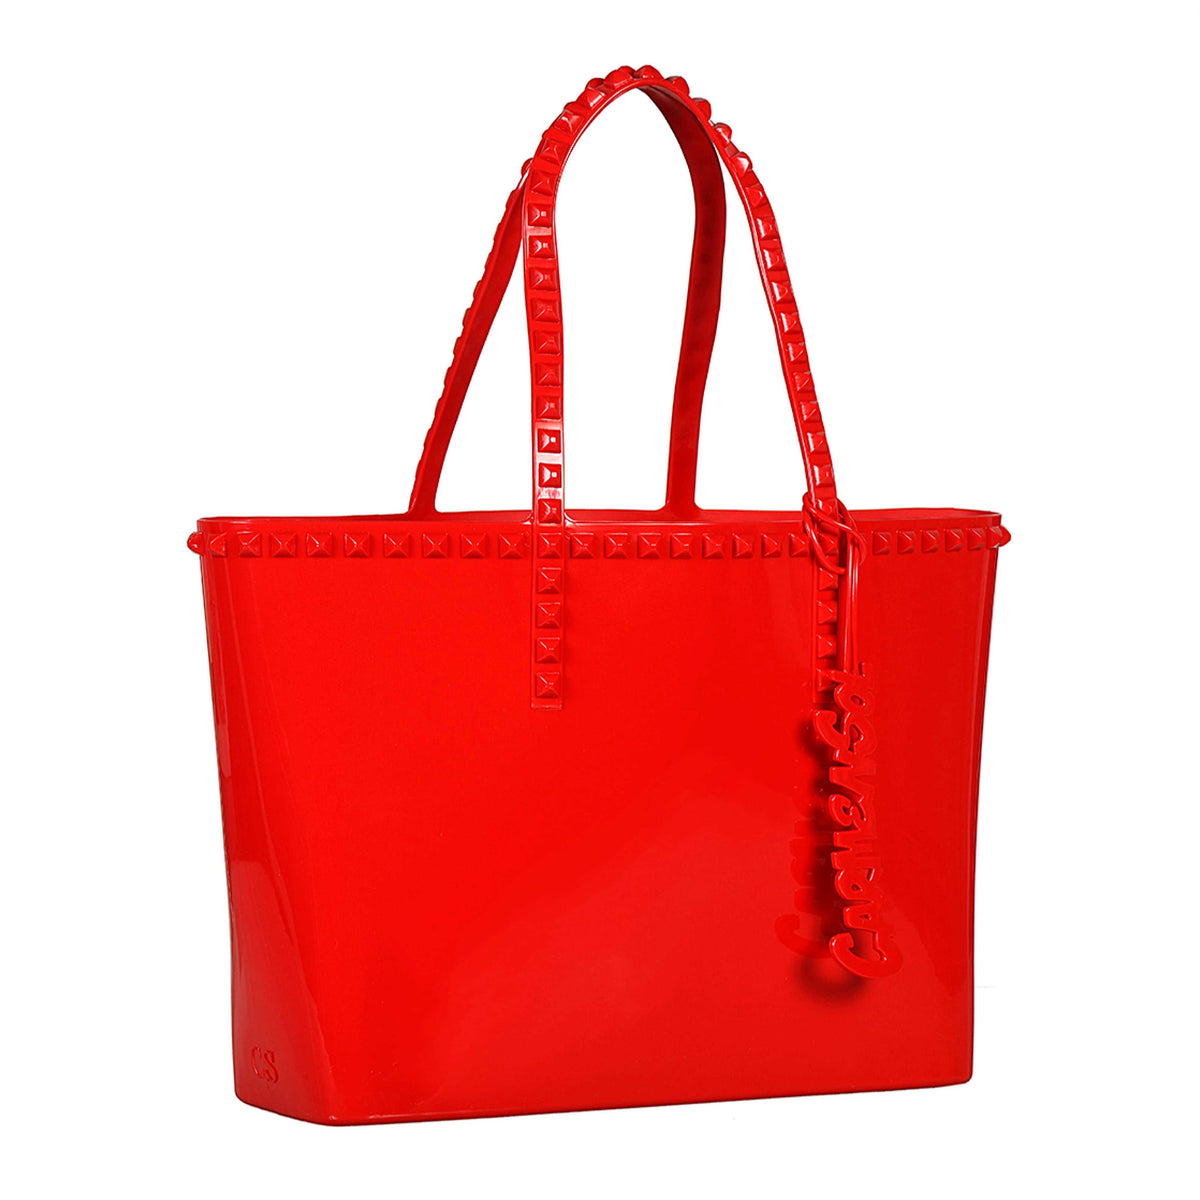 Rose scented Carmen Sol beach purse in color red